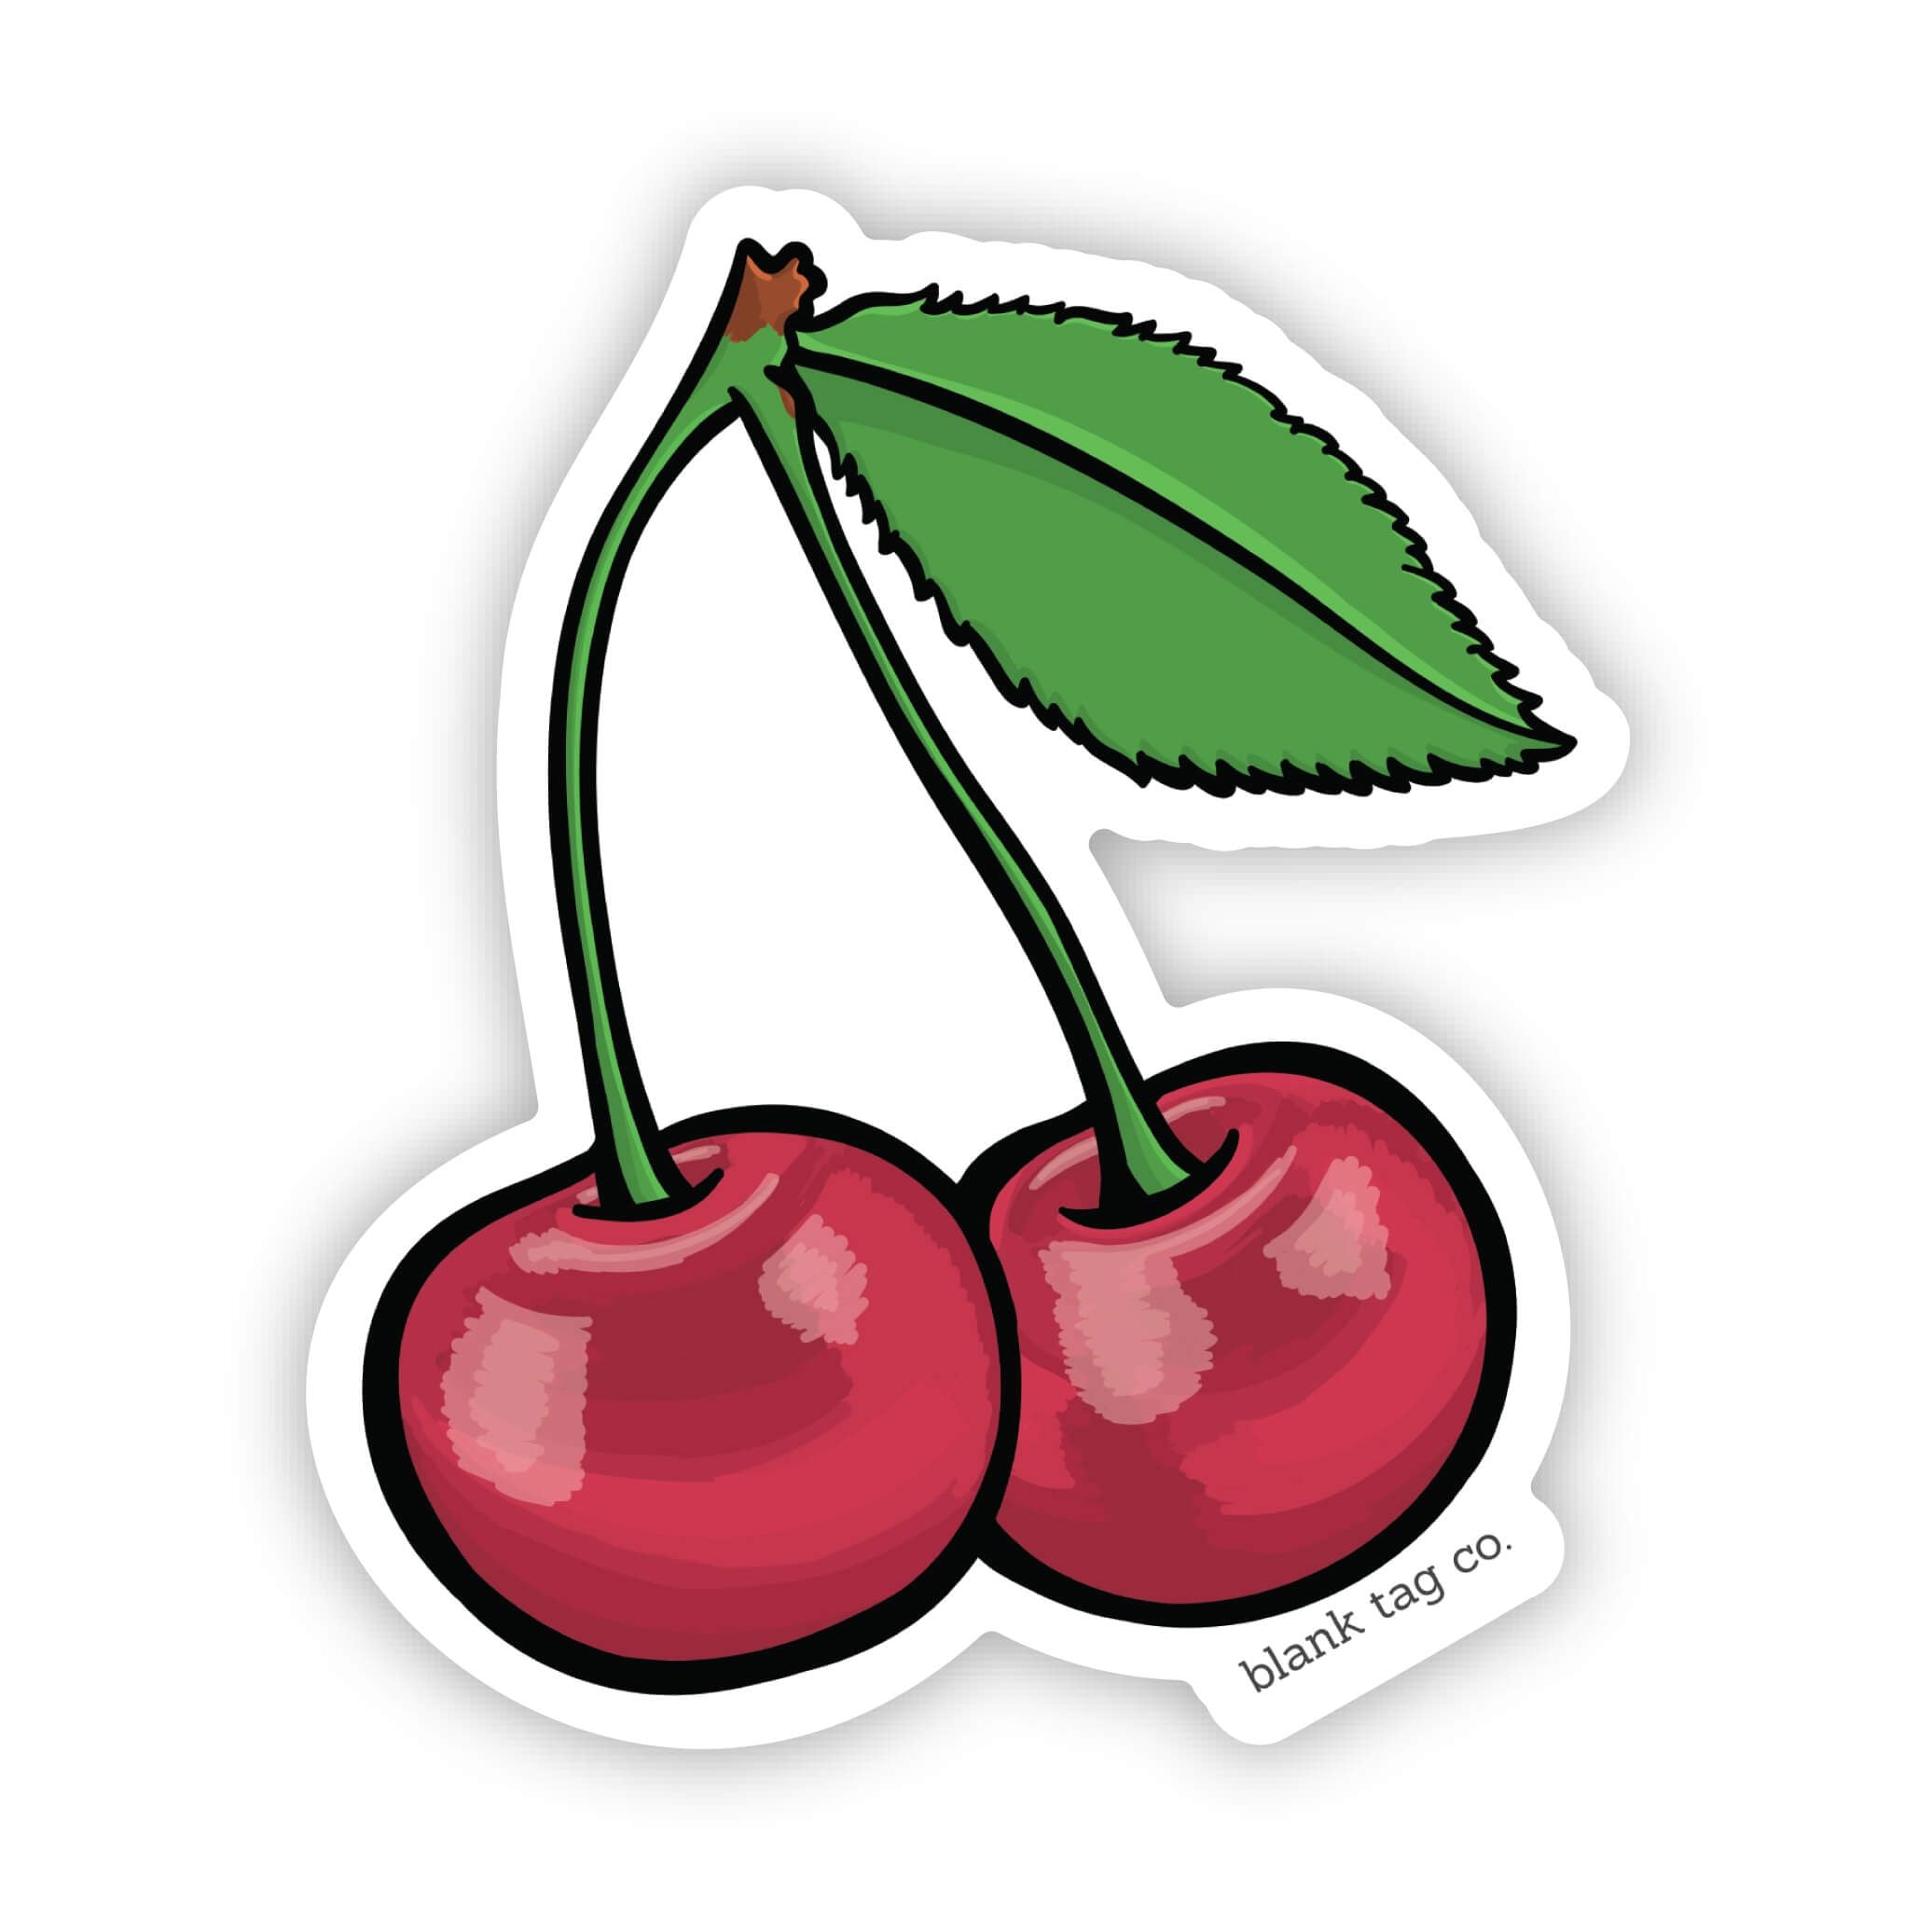 The Cherries Sticker